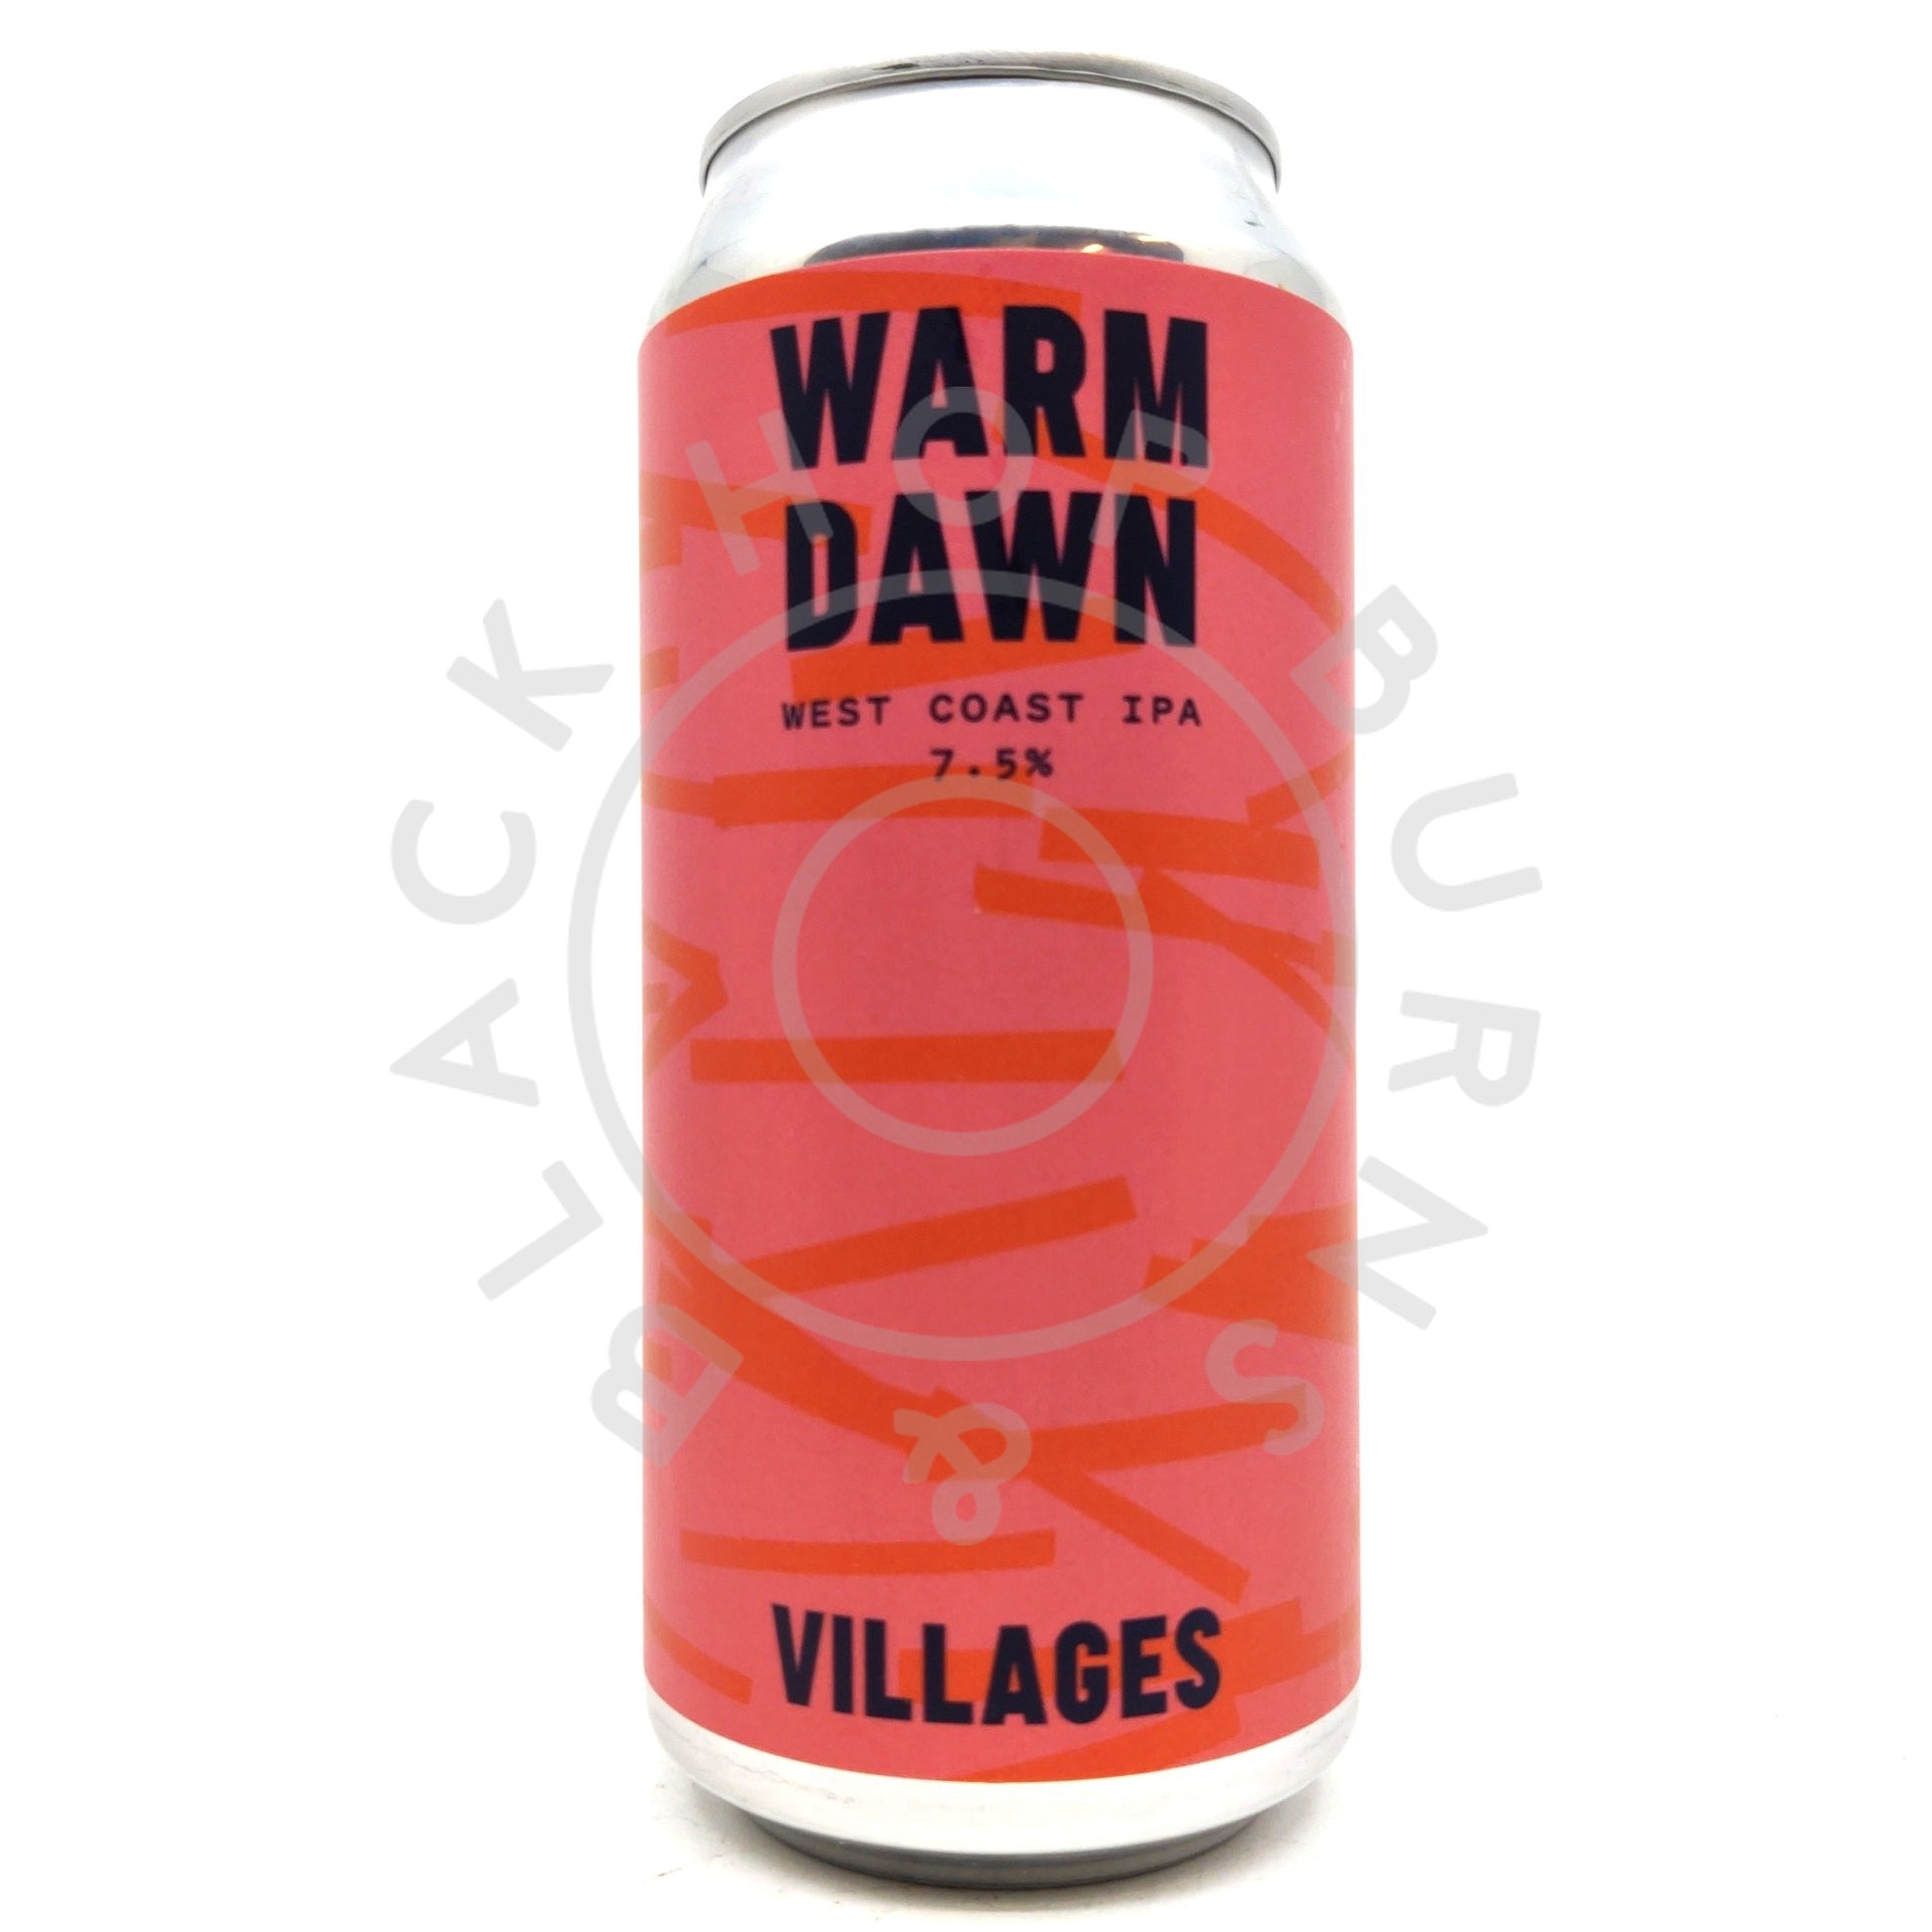 Villages Warm Dawn West Coast IPA 7.5% (440ml can)-Hop Burns & Black